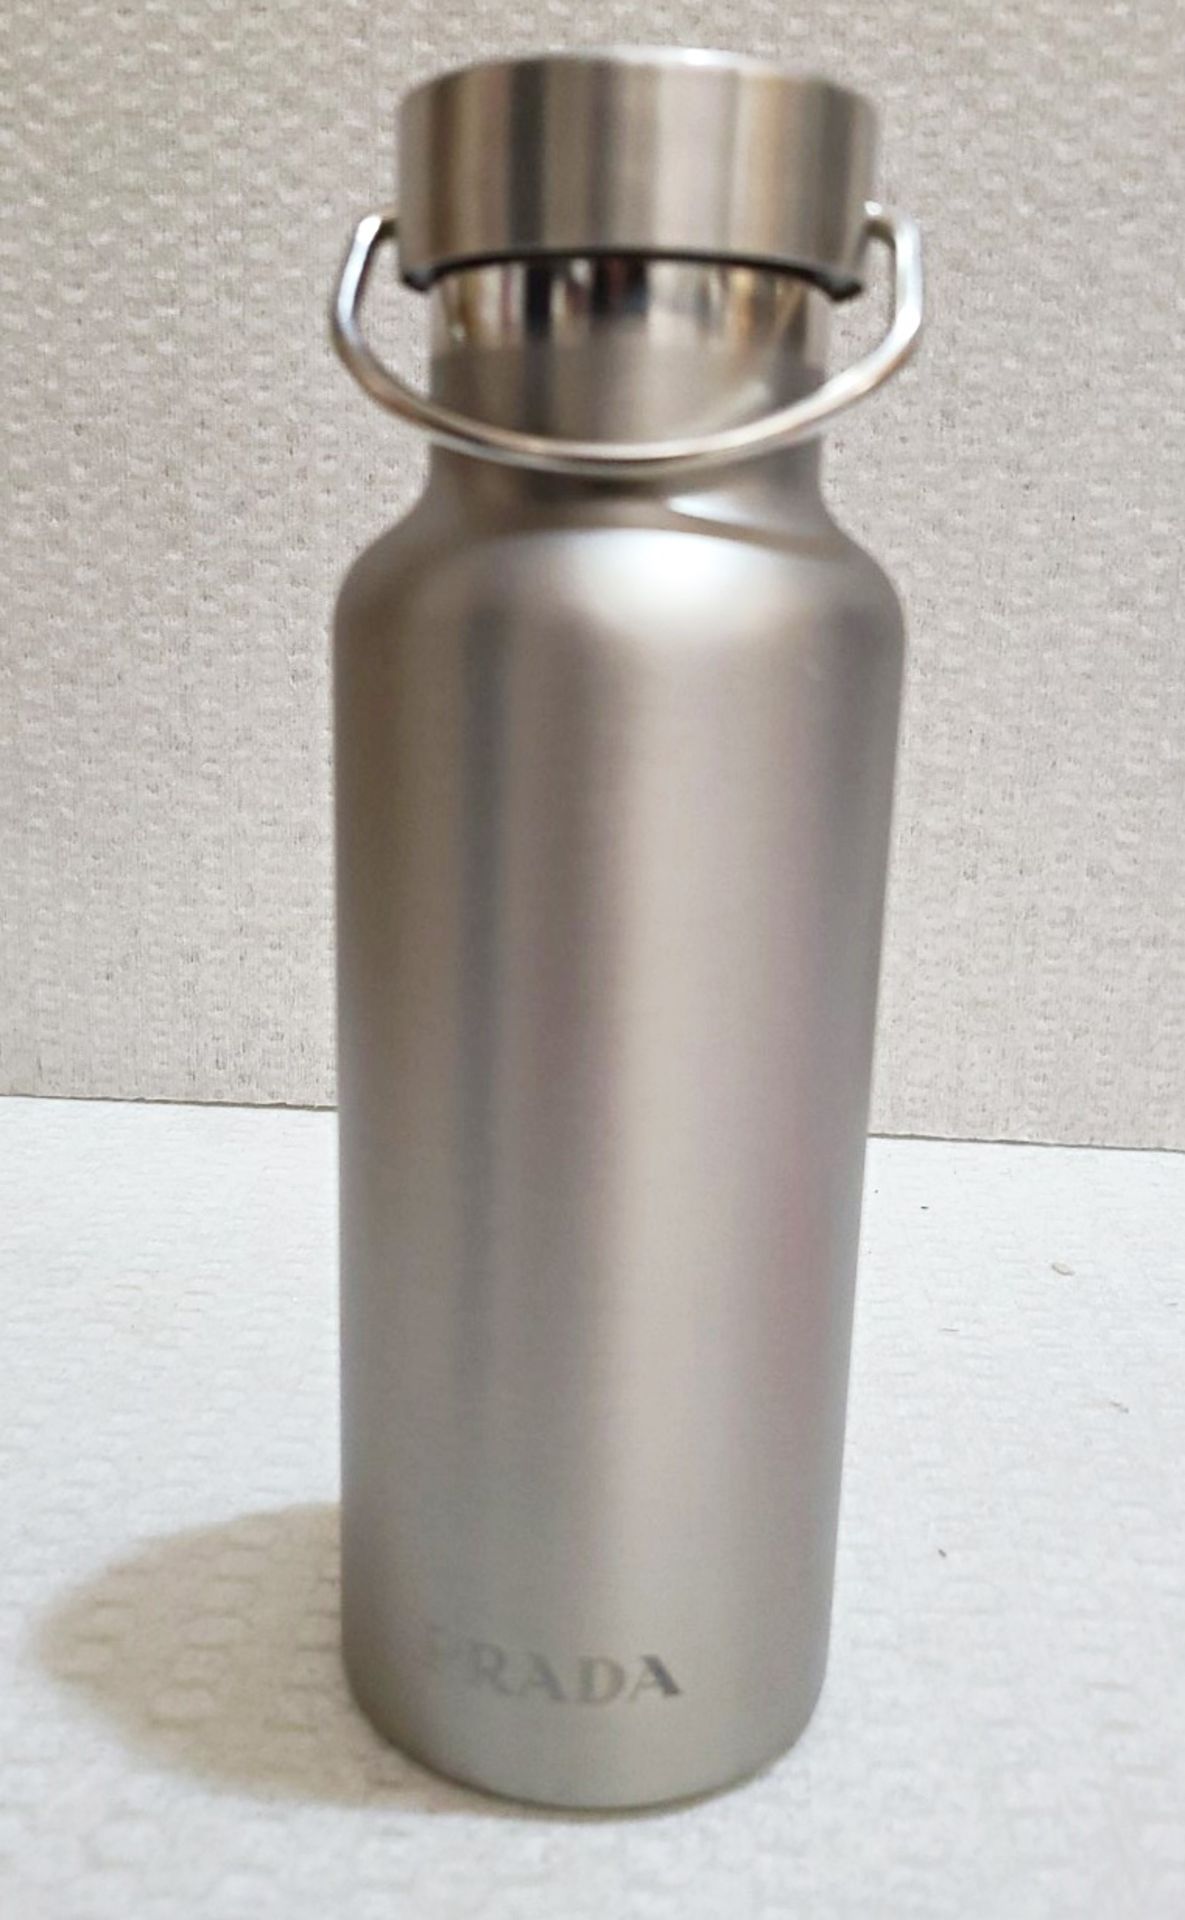 1 x PRADA Stainless Steel Insulated Water Bottle (500ml) - Original Price £100.00